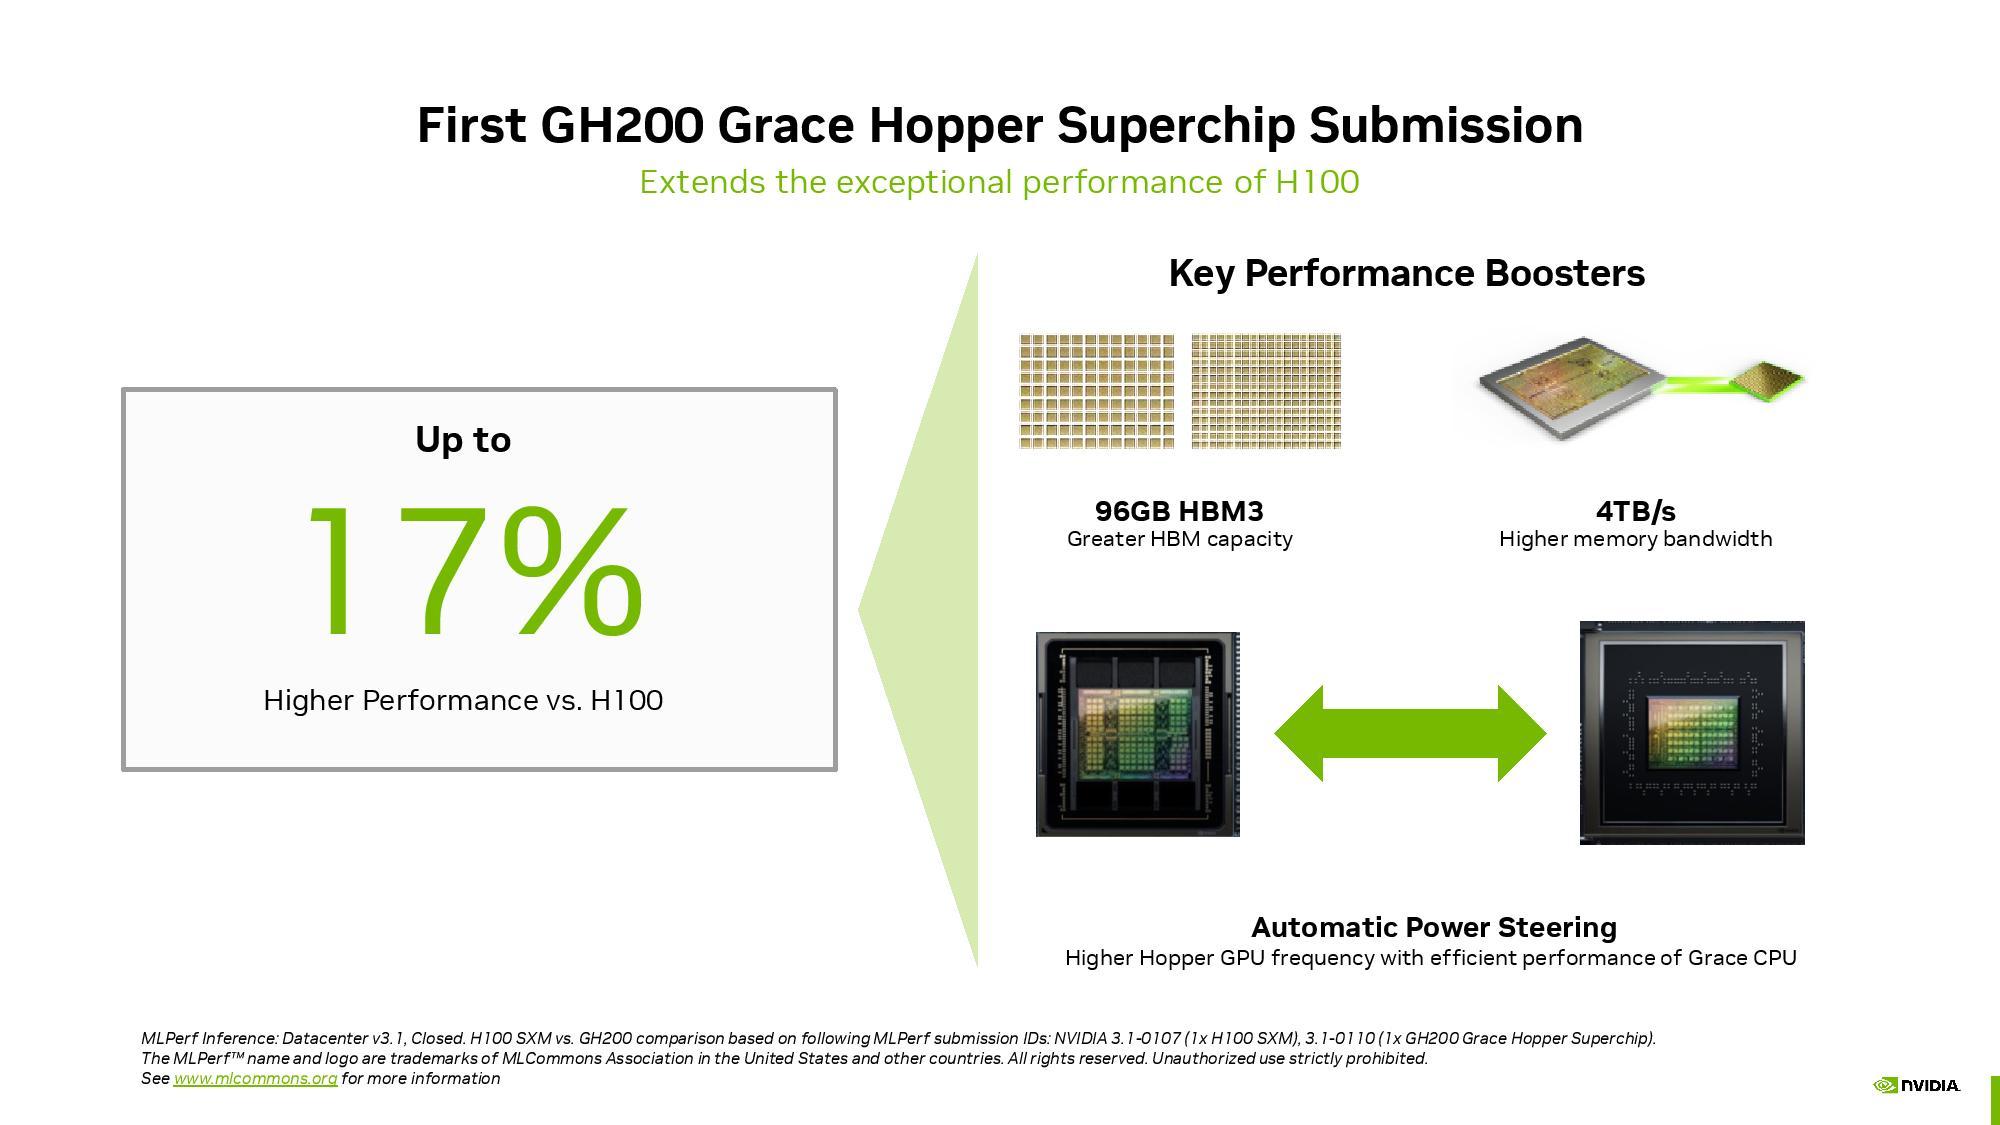 gh200 grace hopper superchip vs h100